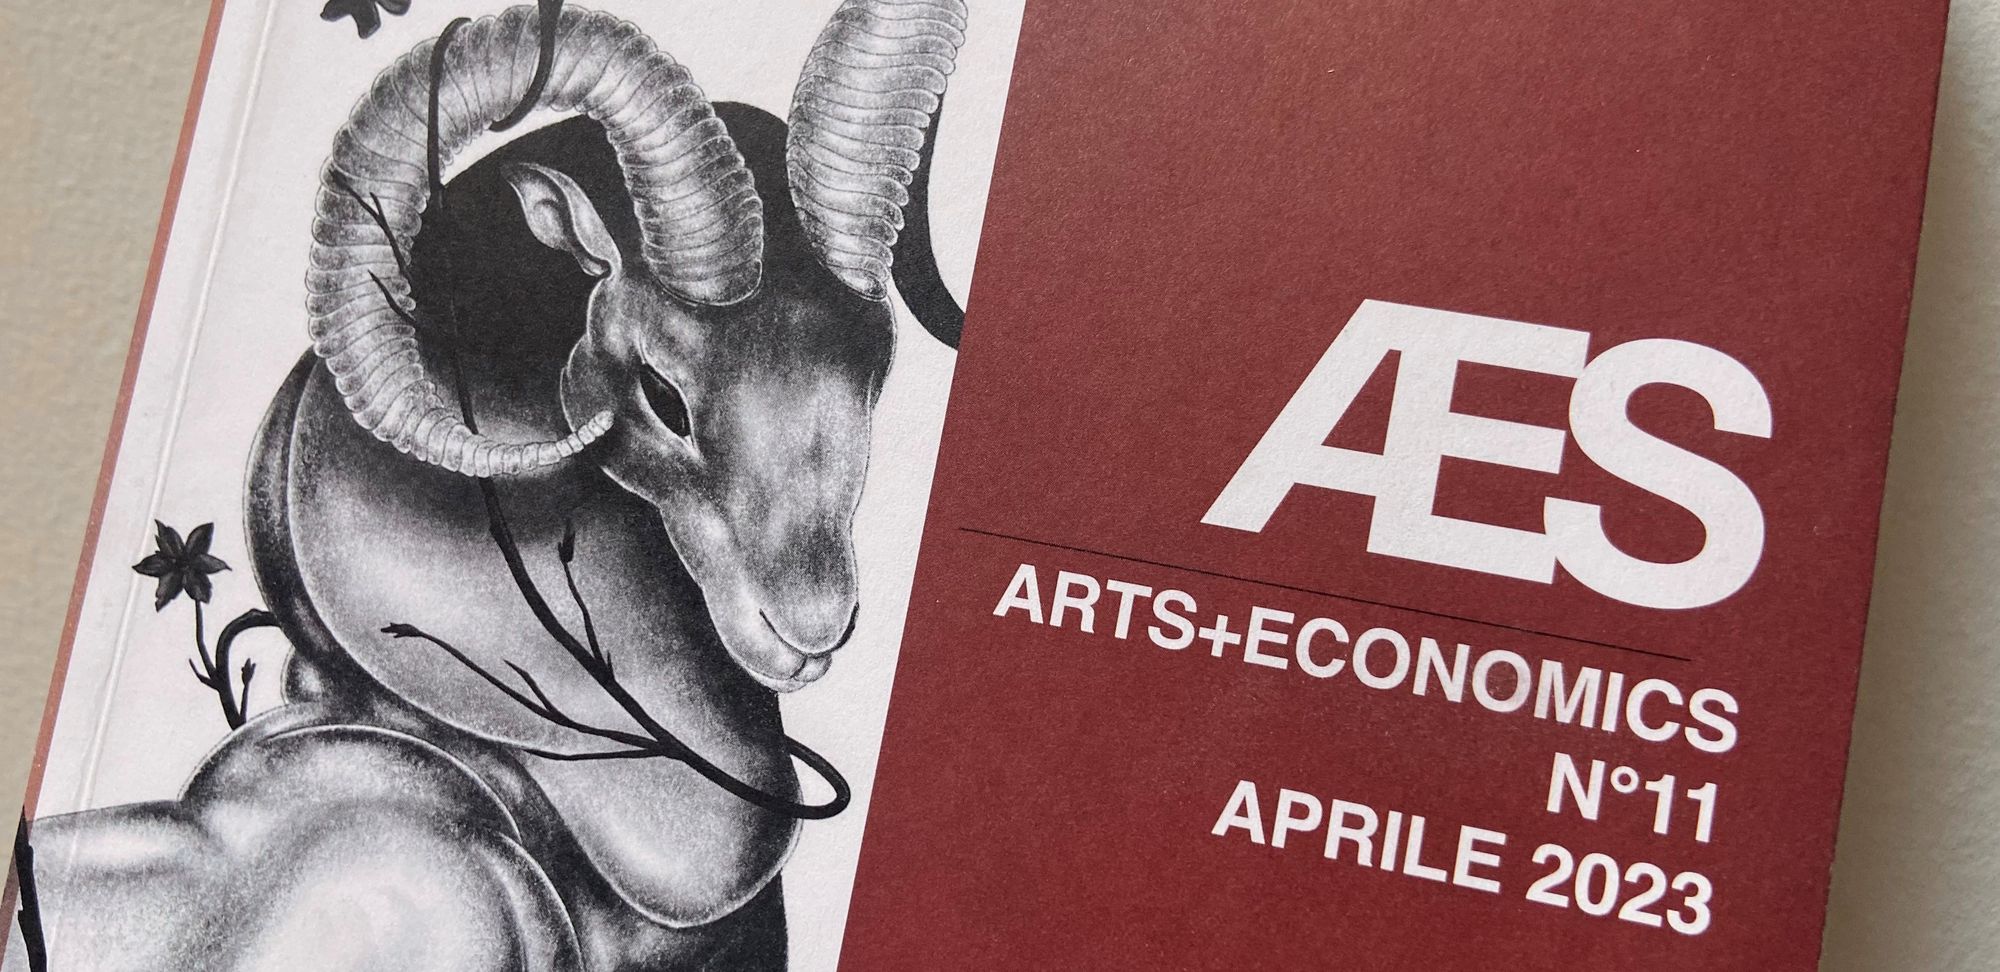 ARTS+ECONOMICS N°11 APRILE 2023